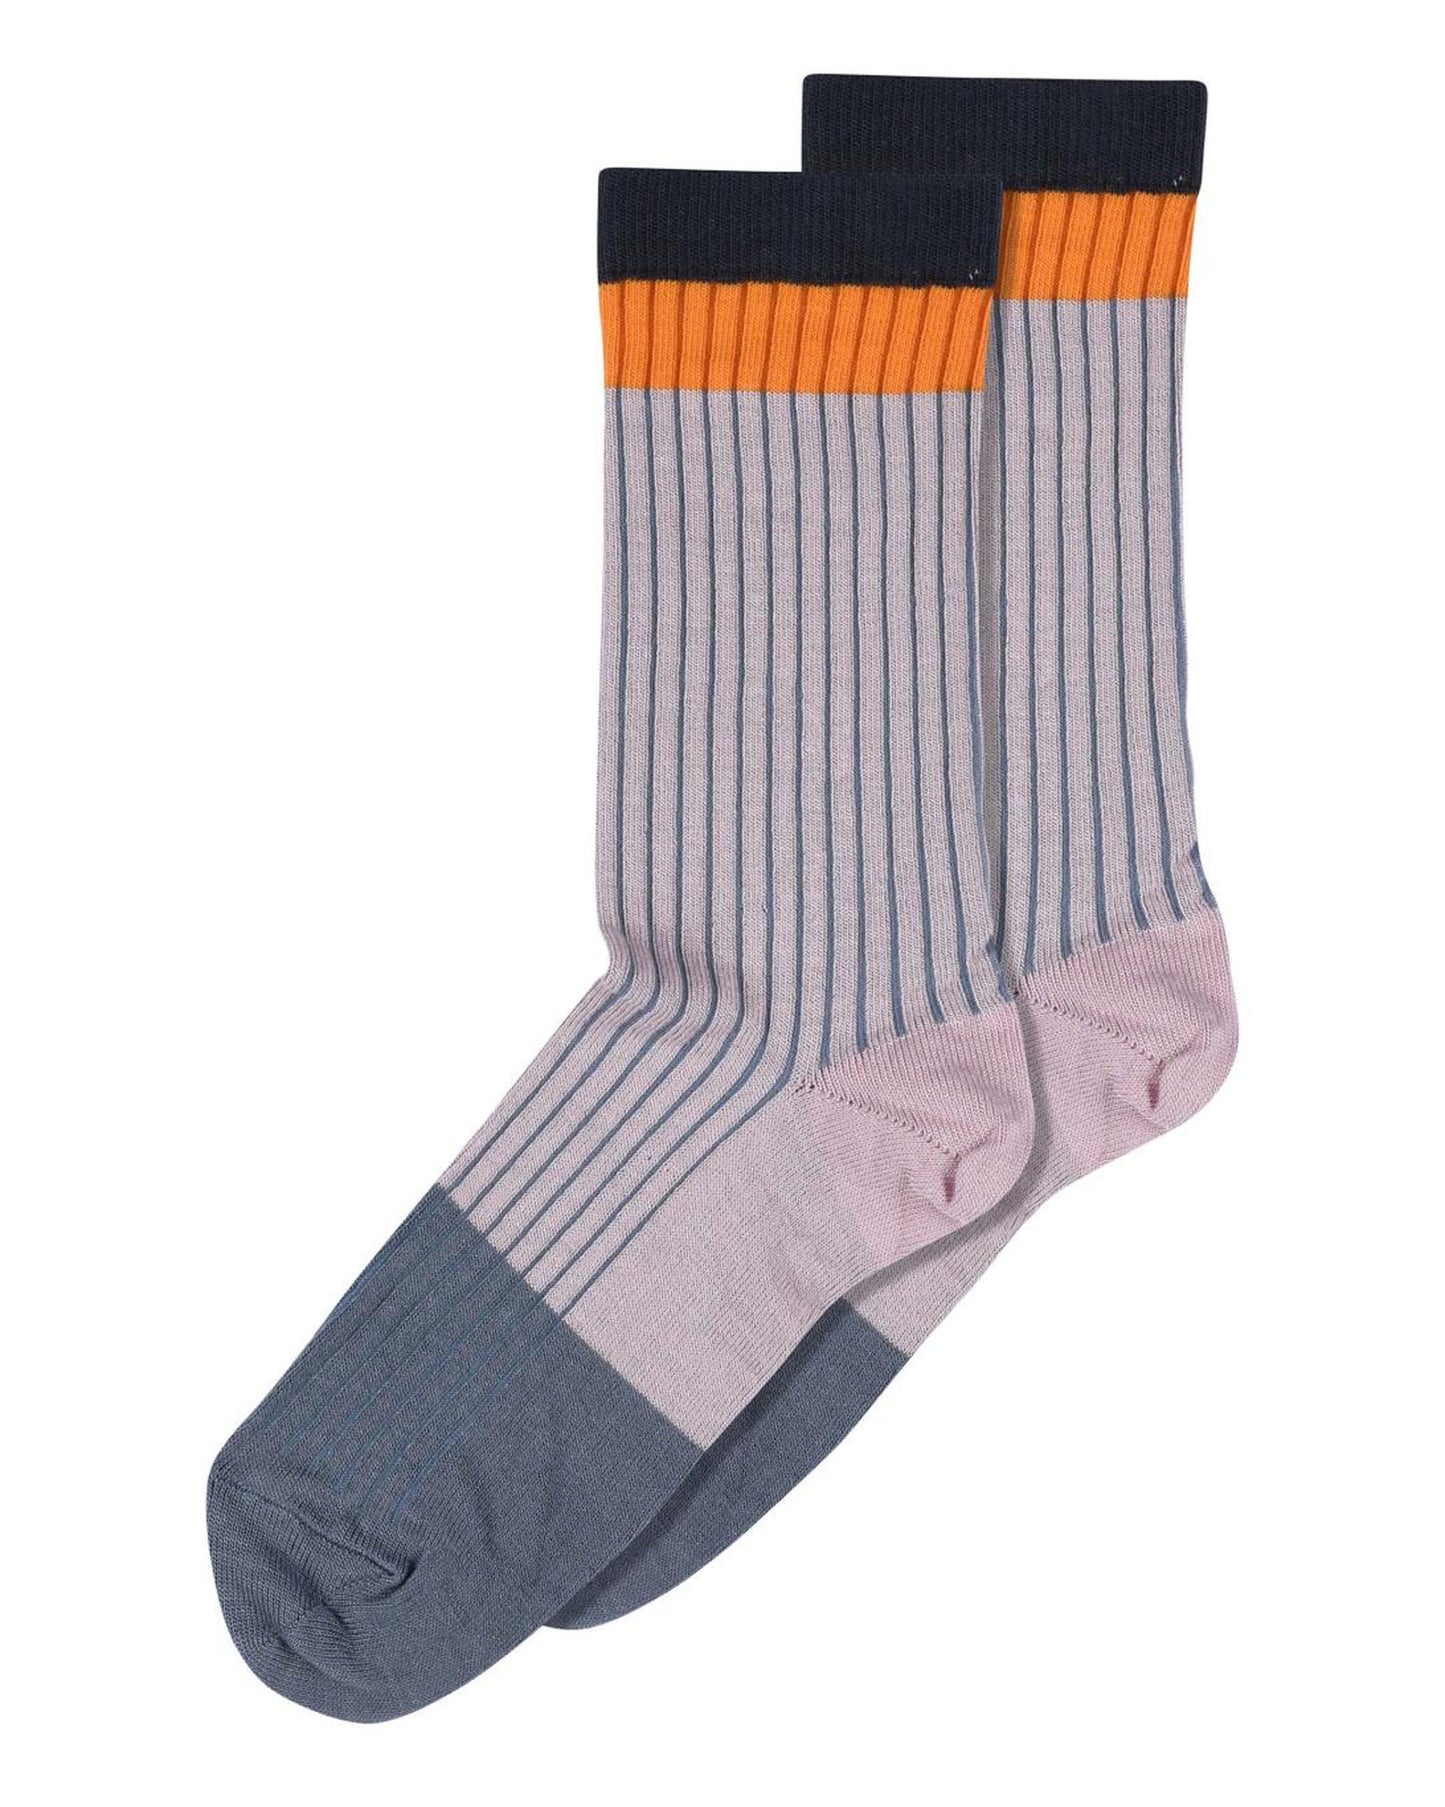 MP Denmark 79704 Paula Socks - Pale lilac ribbed crew length bamboo socks with a navy and orange stripe cuff and grey toe.